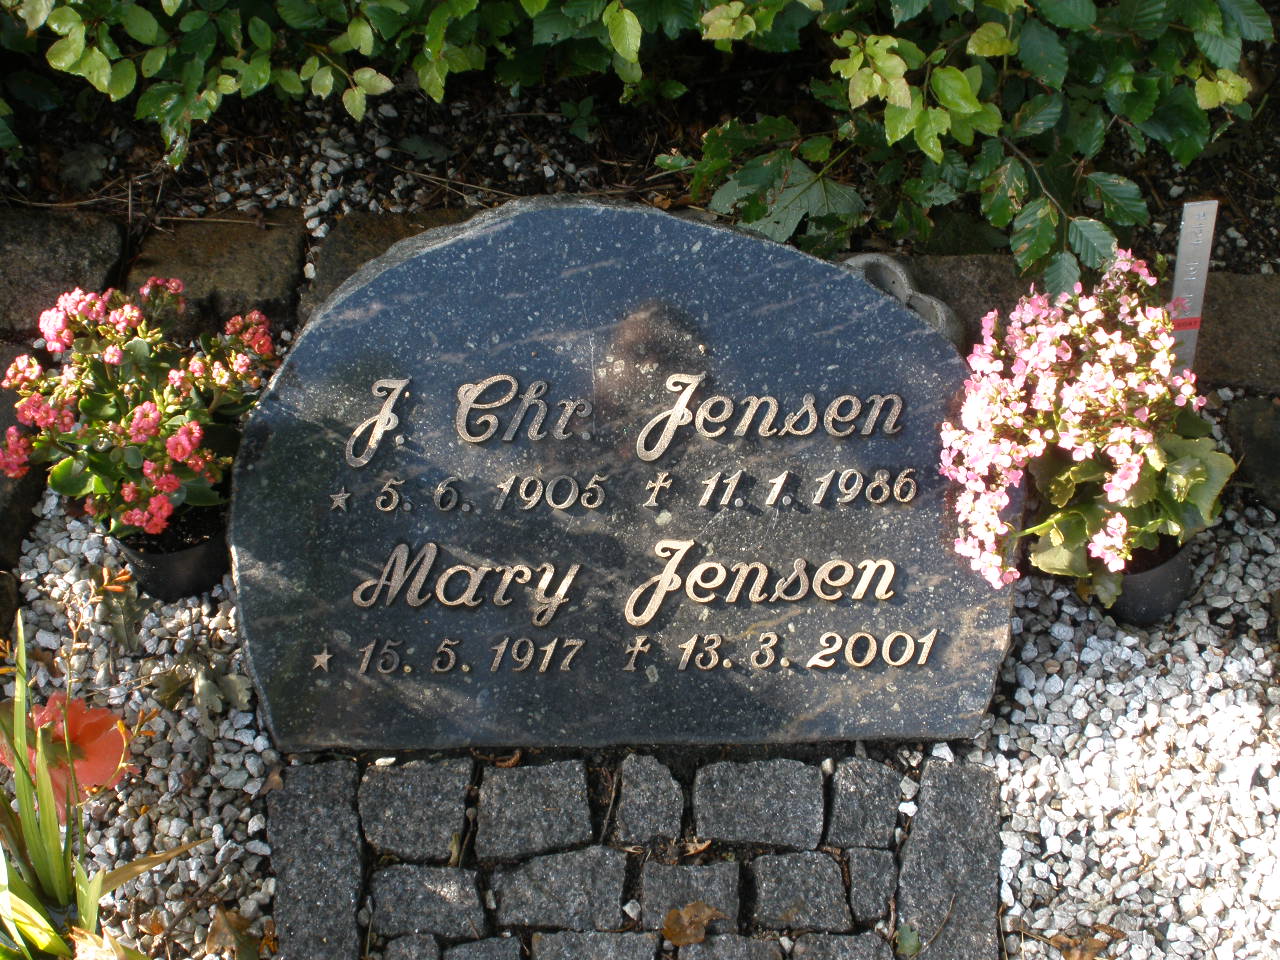 J. Chr. Jensen.JPG